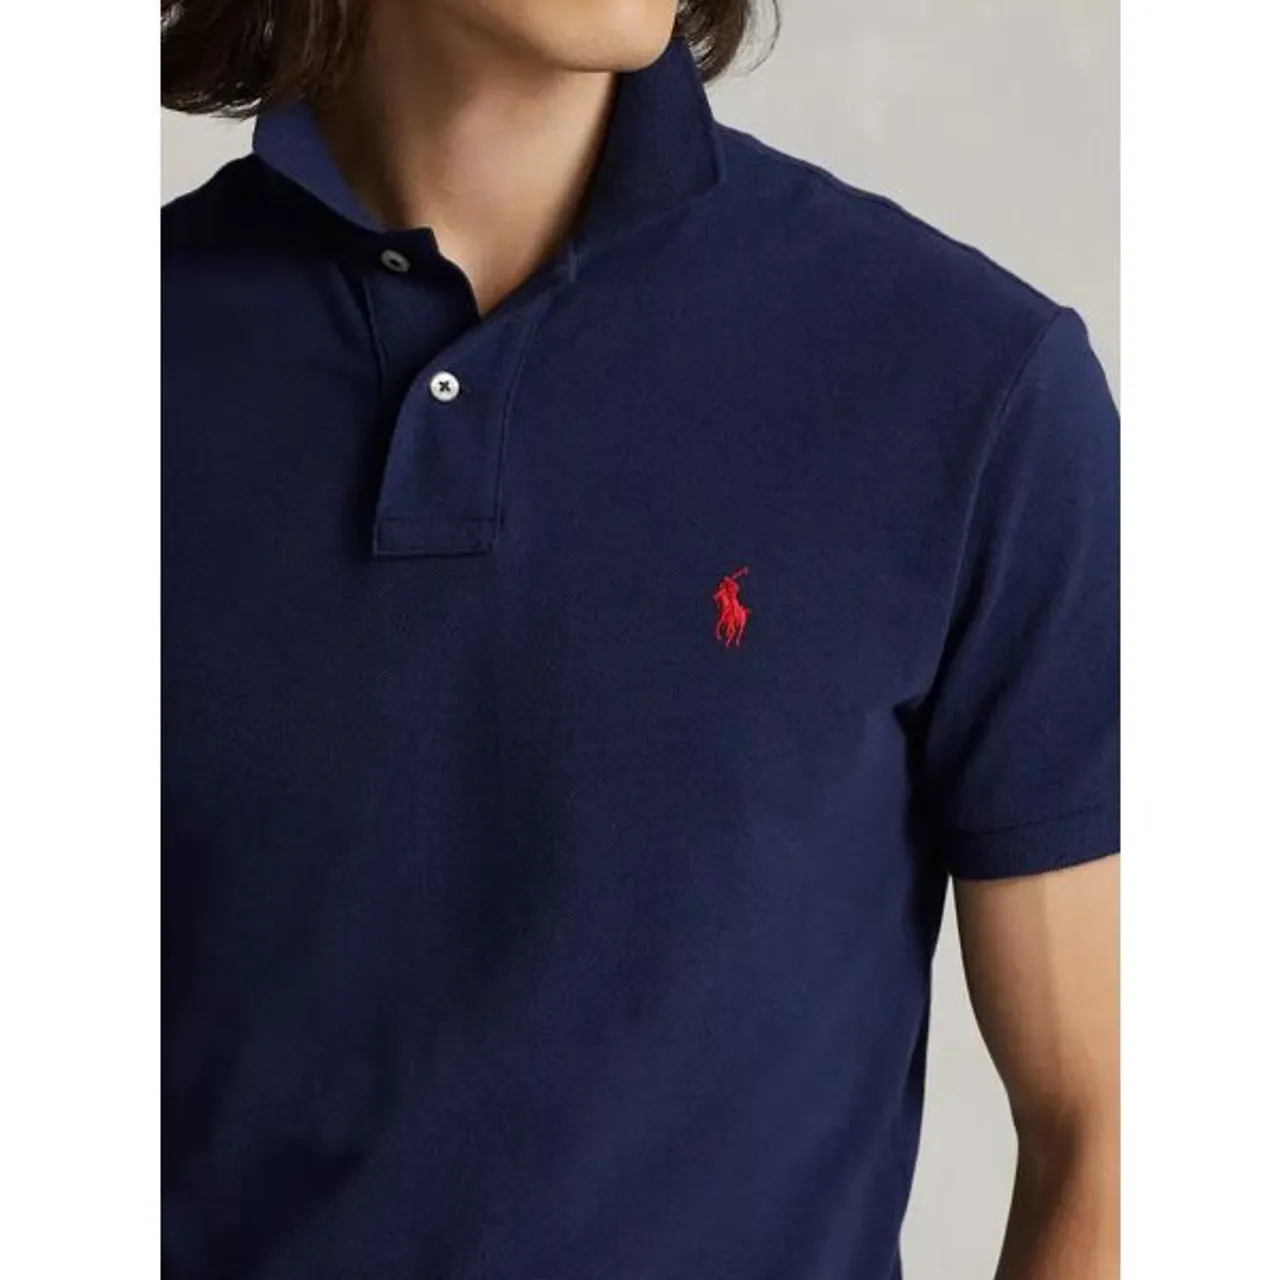 Polo Ralph Lauren Slim Fit Mesh Polo Shirt, Newport Navy - Newport Navy - Male